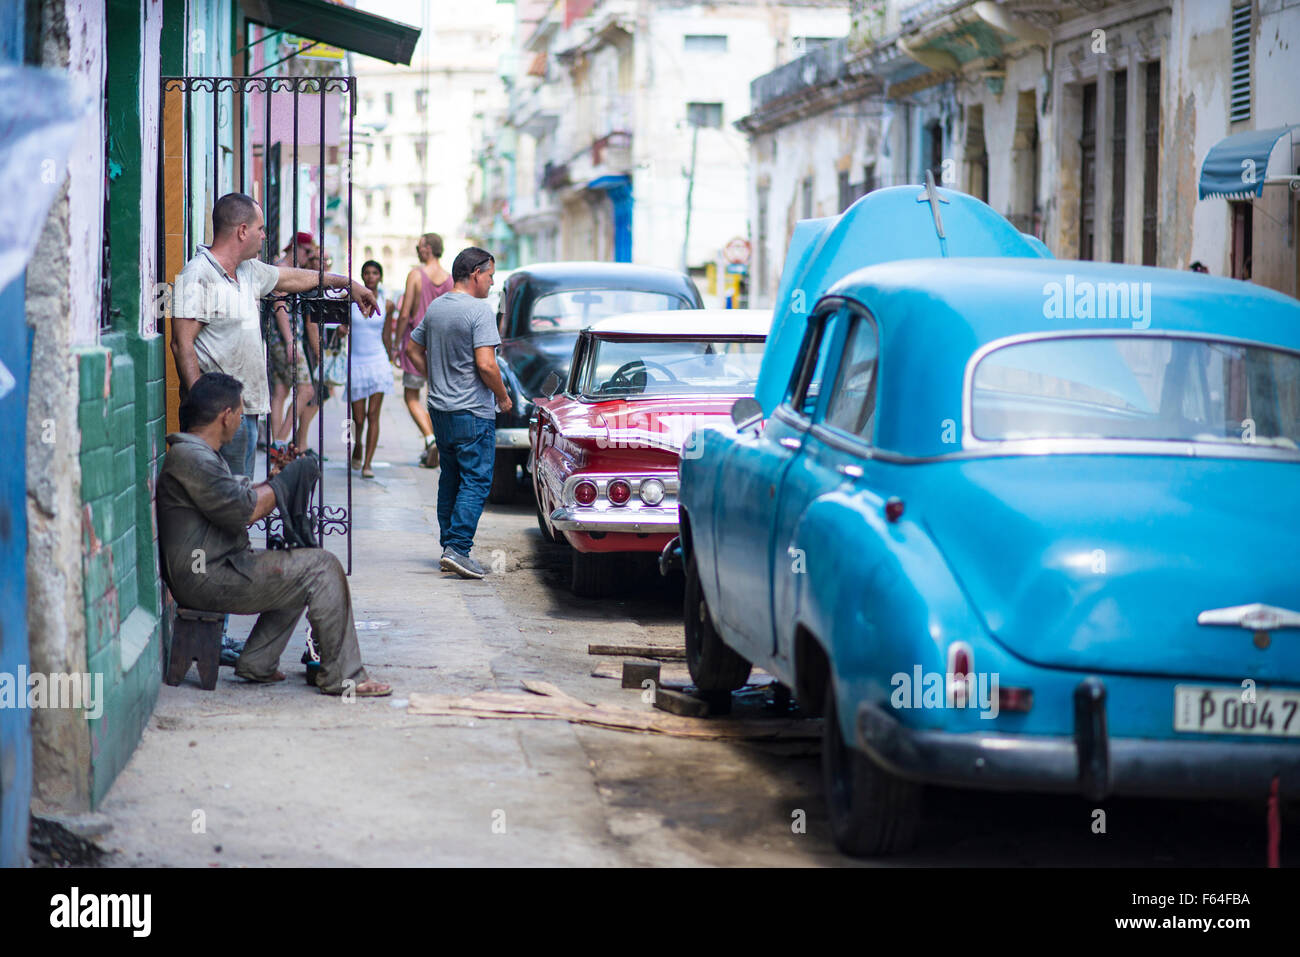 Mechanics working on a a vintage American car in Havana, Cuba Stock Photo